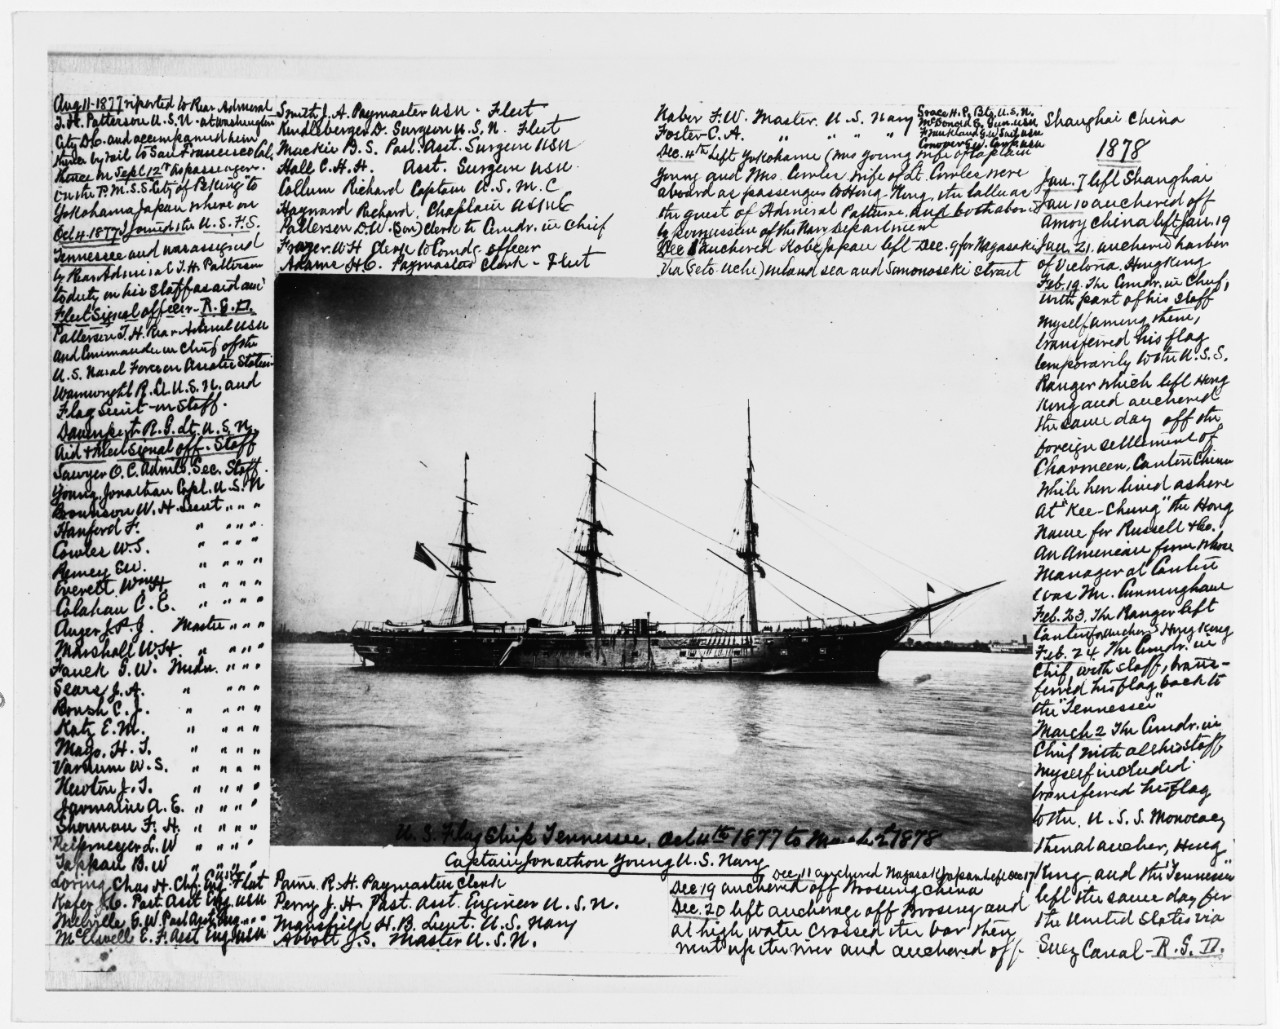 USS TENNESSEE (1867-1886)